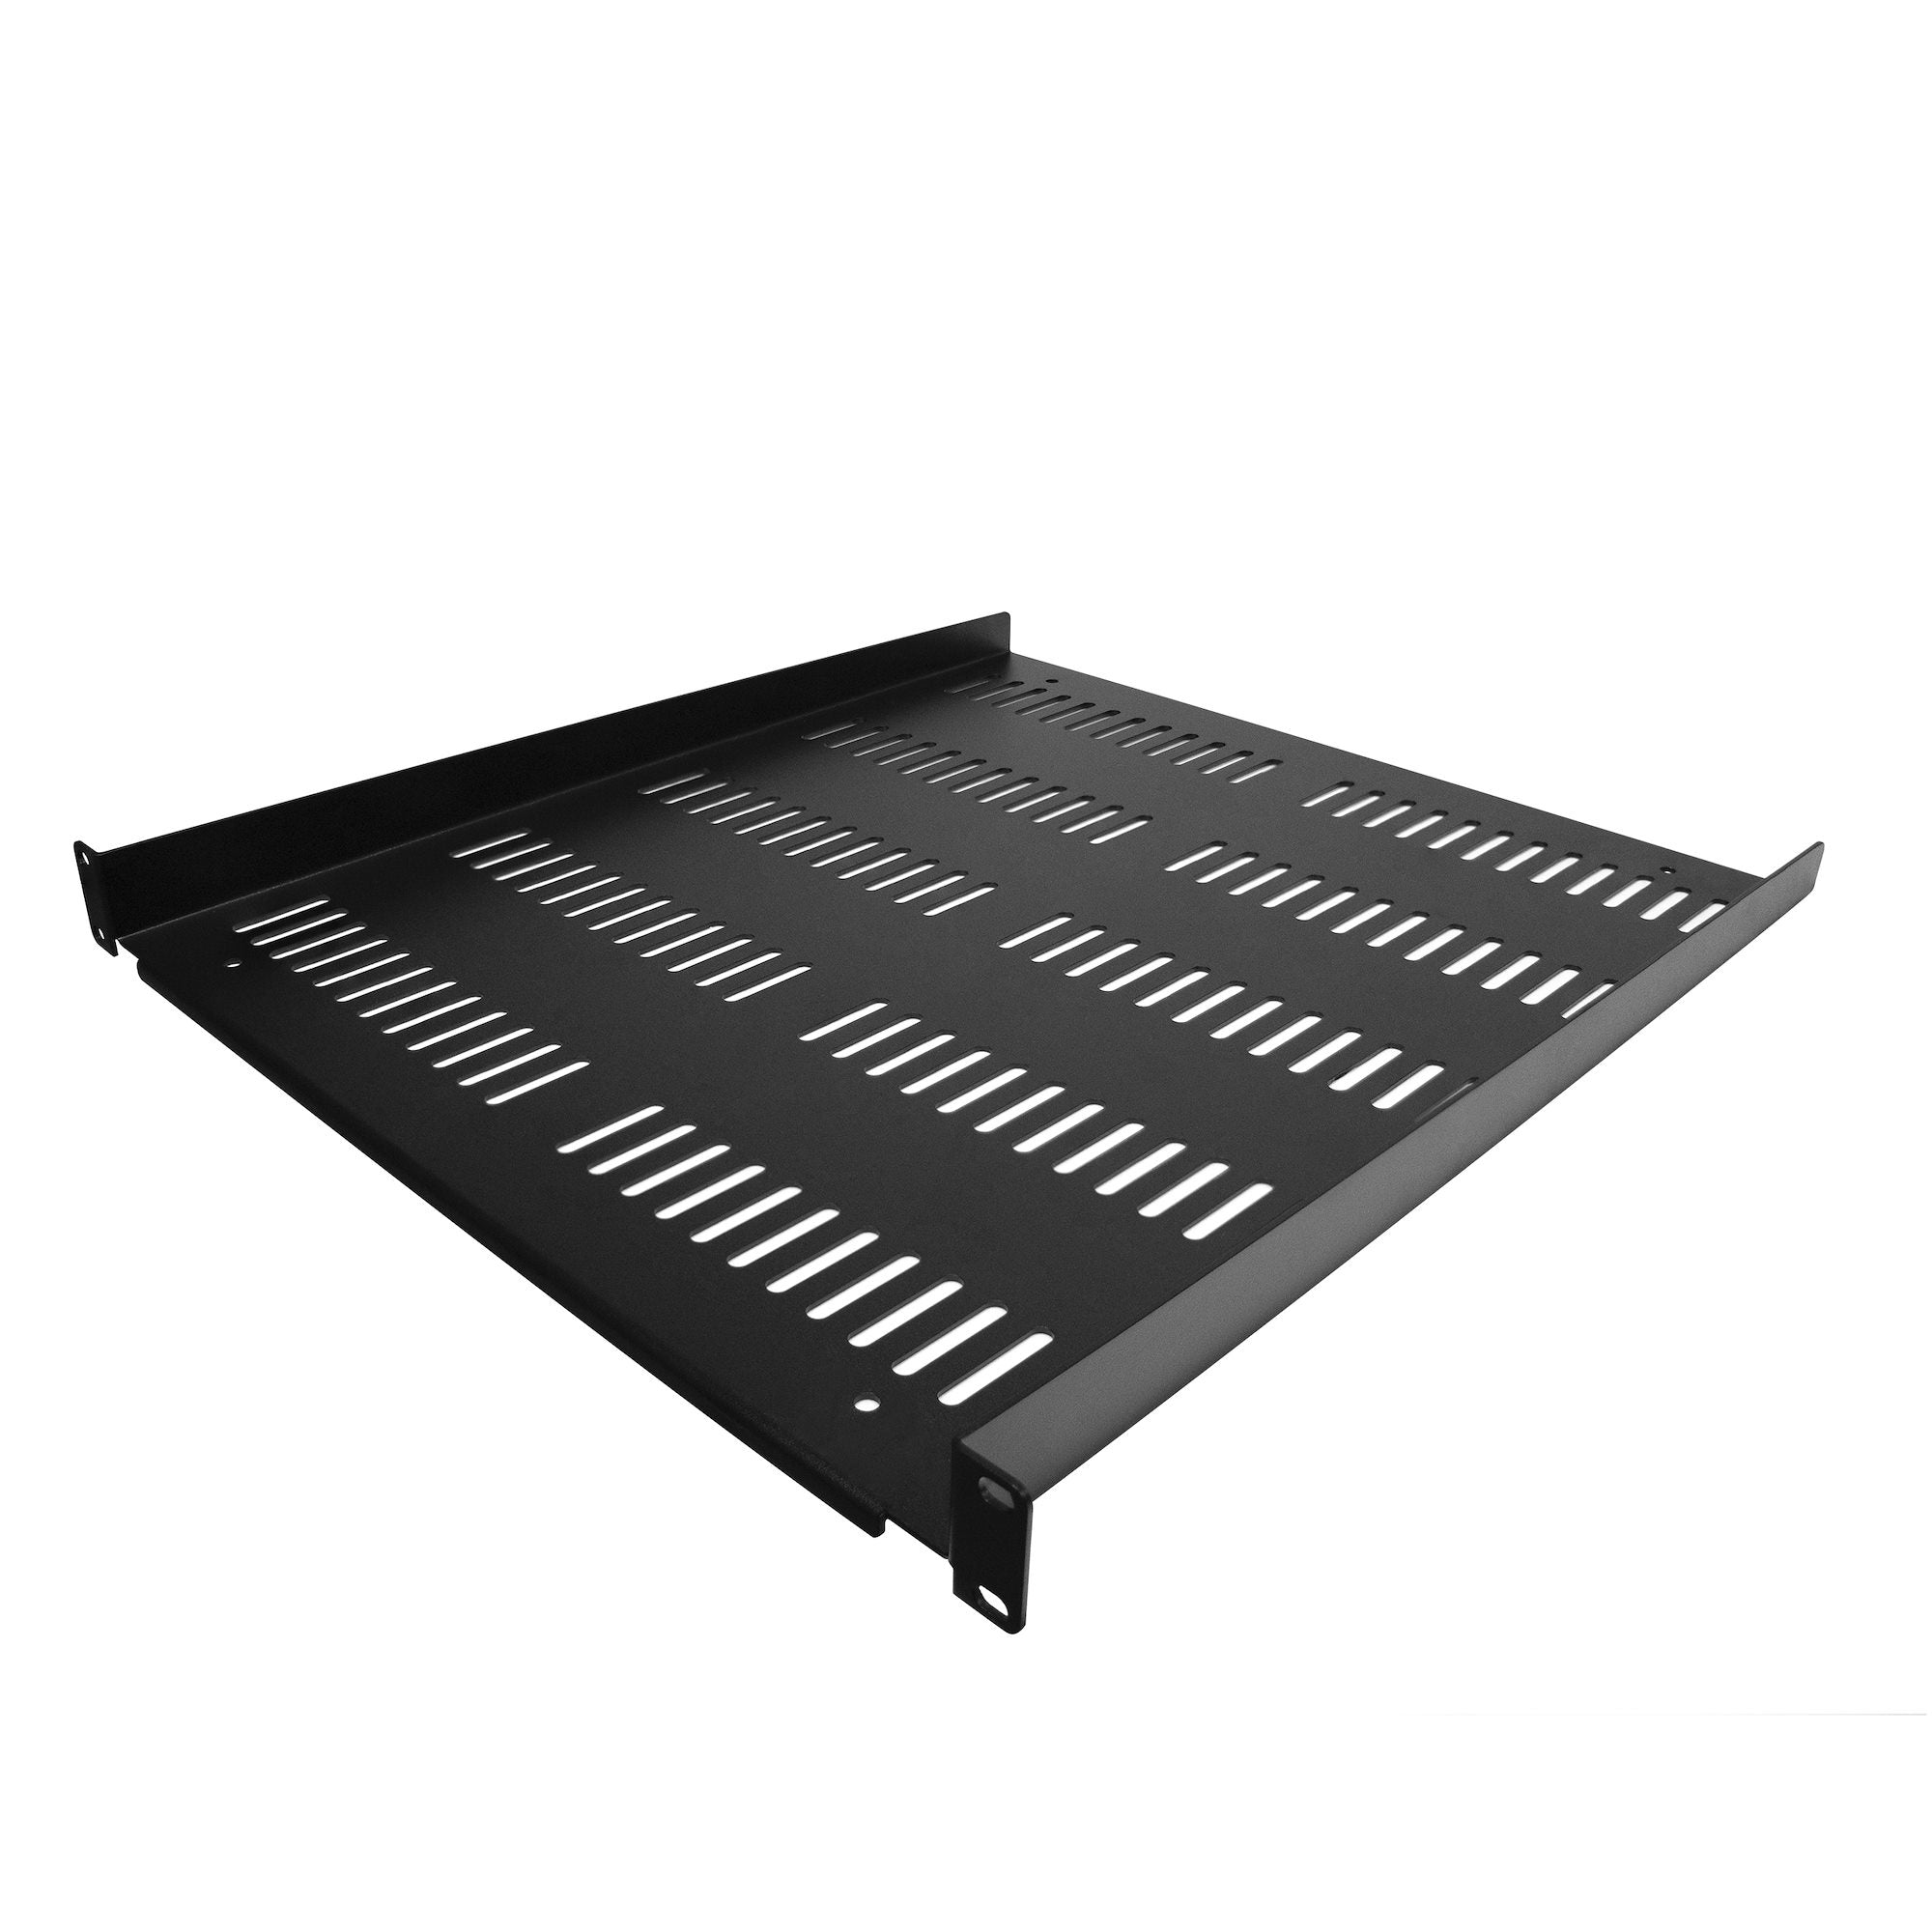 StarTech.com 1U Server Rack Shelf - Universal Vented Rack Mount Cantilever Tray for 19" Network Equipment Rack & Cabinet - Durable Design - Weight Capacity 55lb/25kg - 20" Deep Shelf, Black